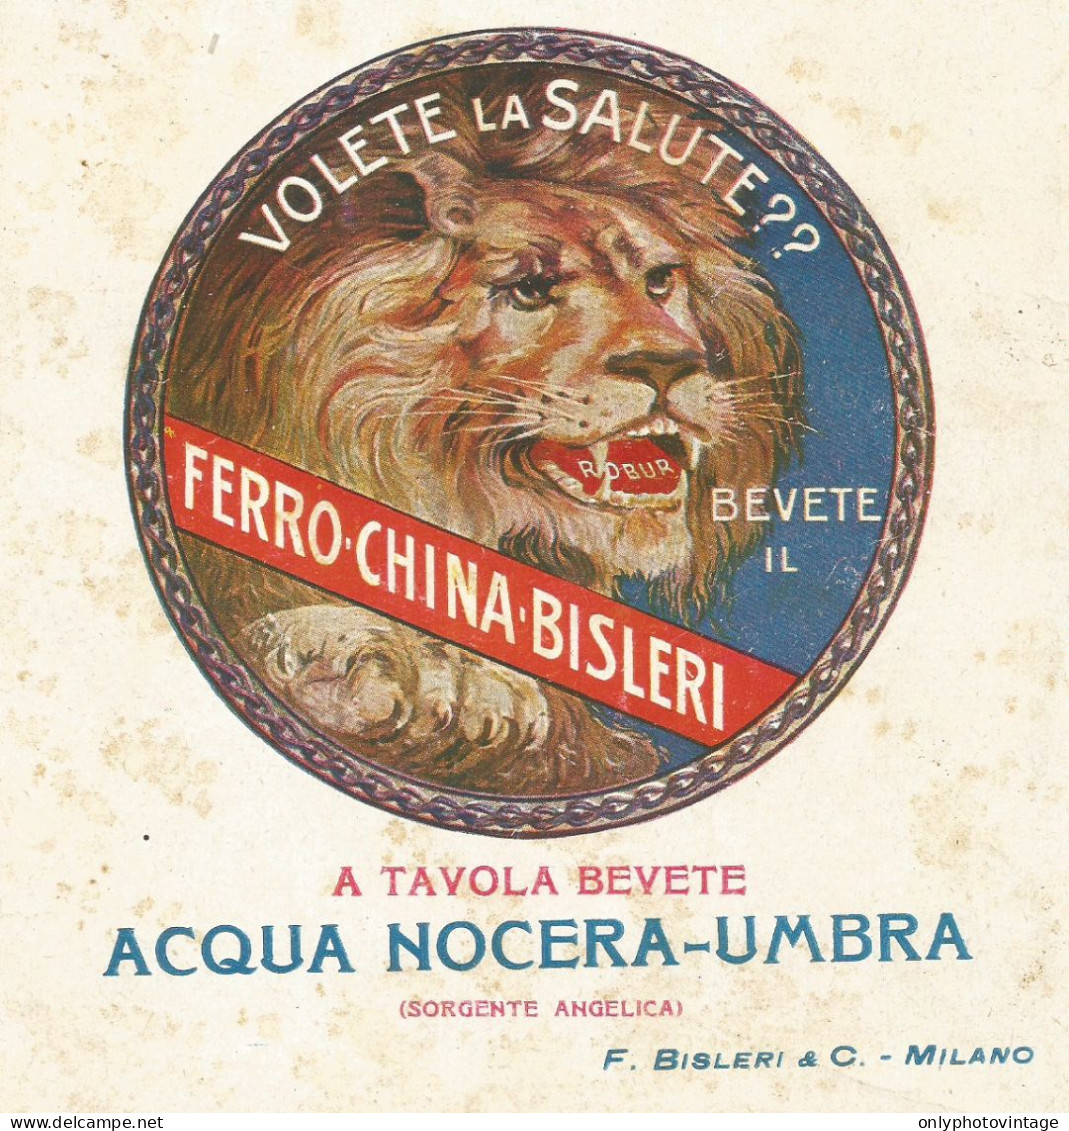 Ferro China BISLERI - Pubblicità 1927 - Advertising - Reclame